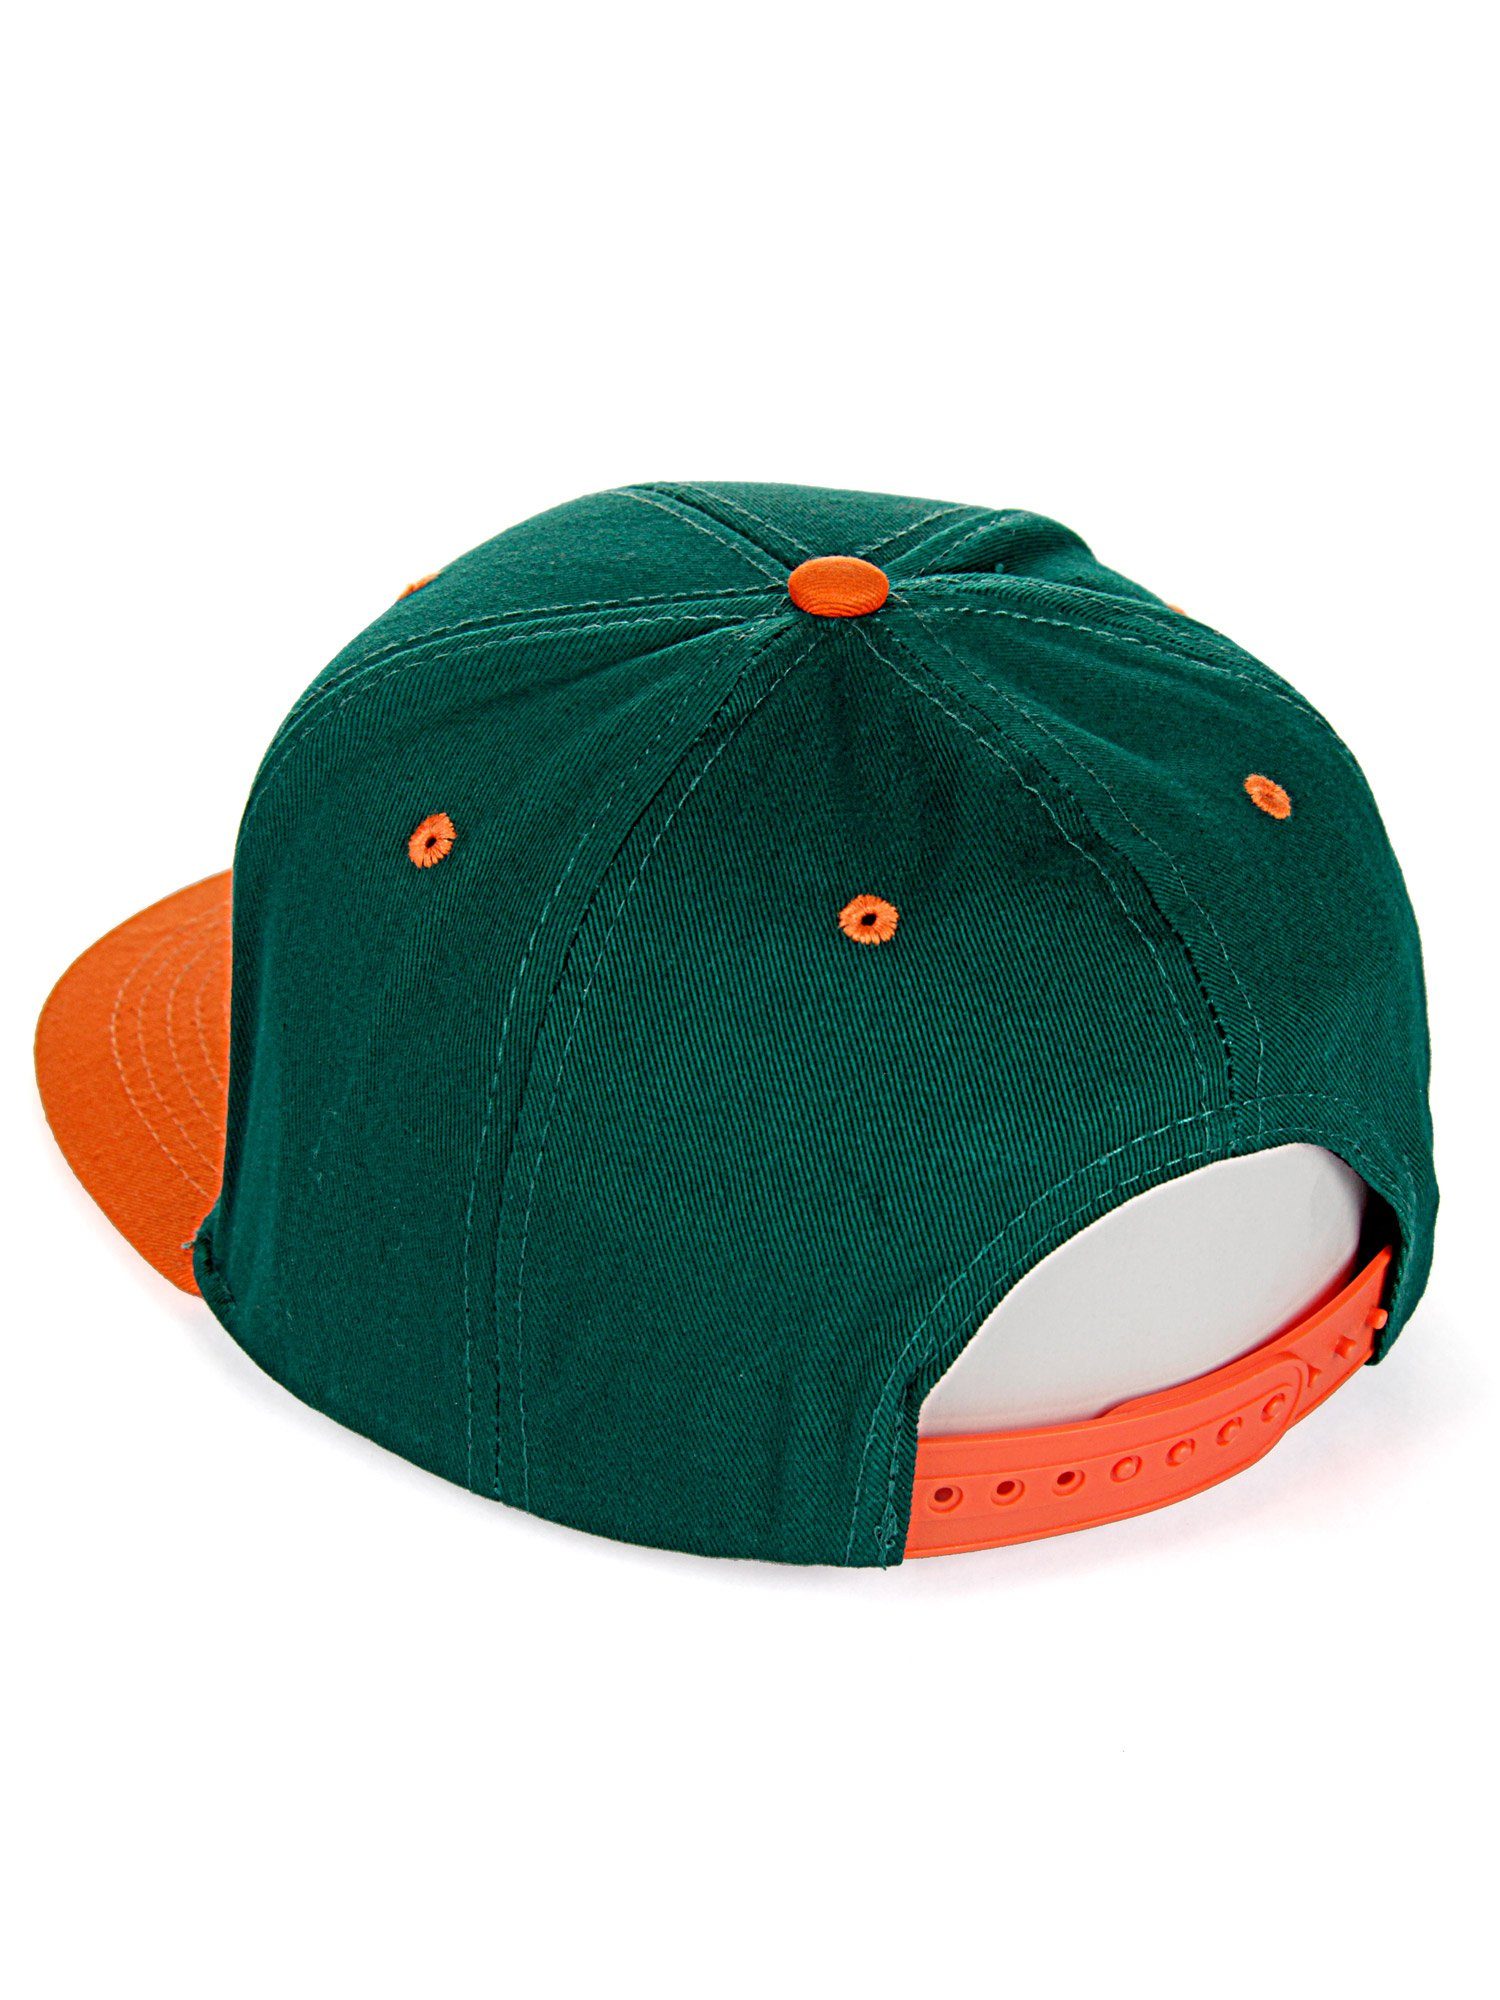 RedBridge Baseball Cap grün-orange kontrastfarbigem Schirm mit Sittingbourne